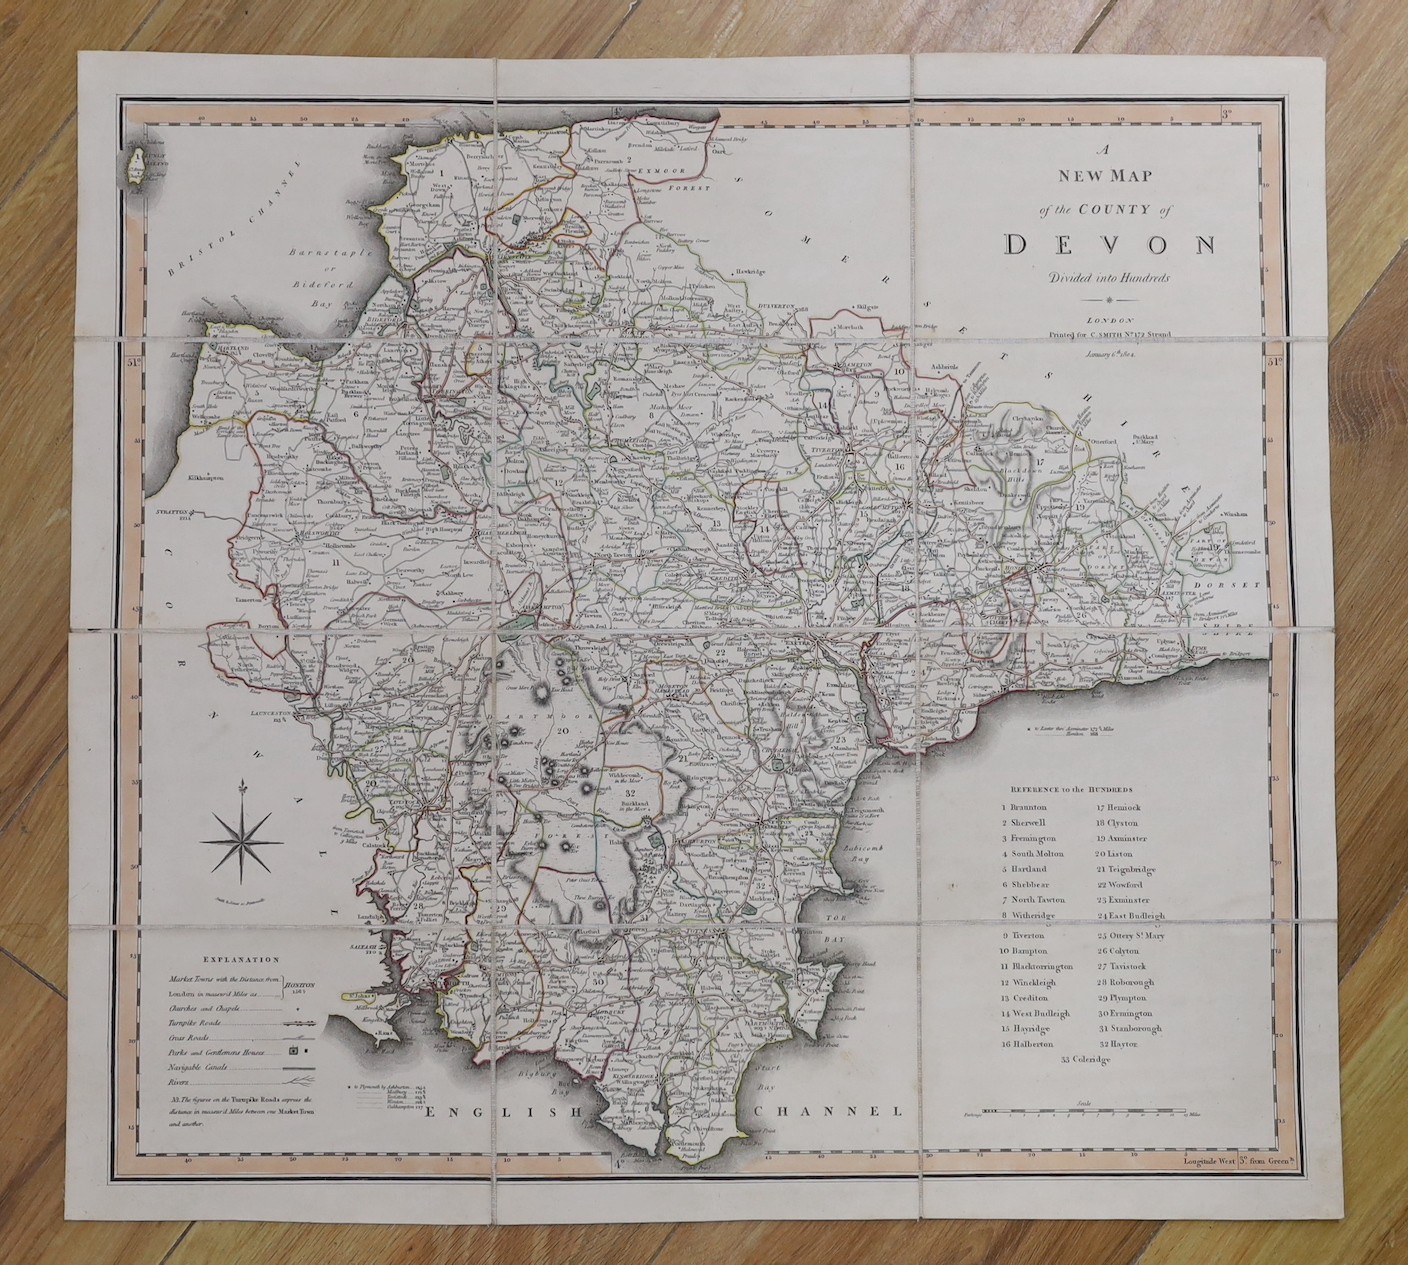 Five unframed engraved maps - Norway - C.I. Pontoppidan - Det Nordlige Norge, 1795, 54 x 70cms; Italy - Jailott - L’Italie, 1718, 53 x 67cms, in slip case; John Senex - Germany, 1710, 66 x 98; C. Smith - Devon, 1804, 48